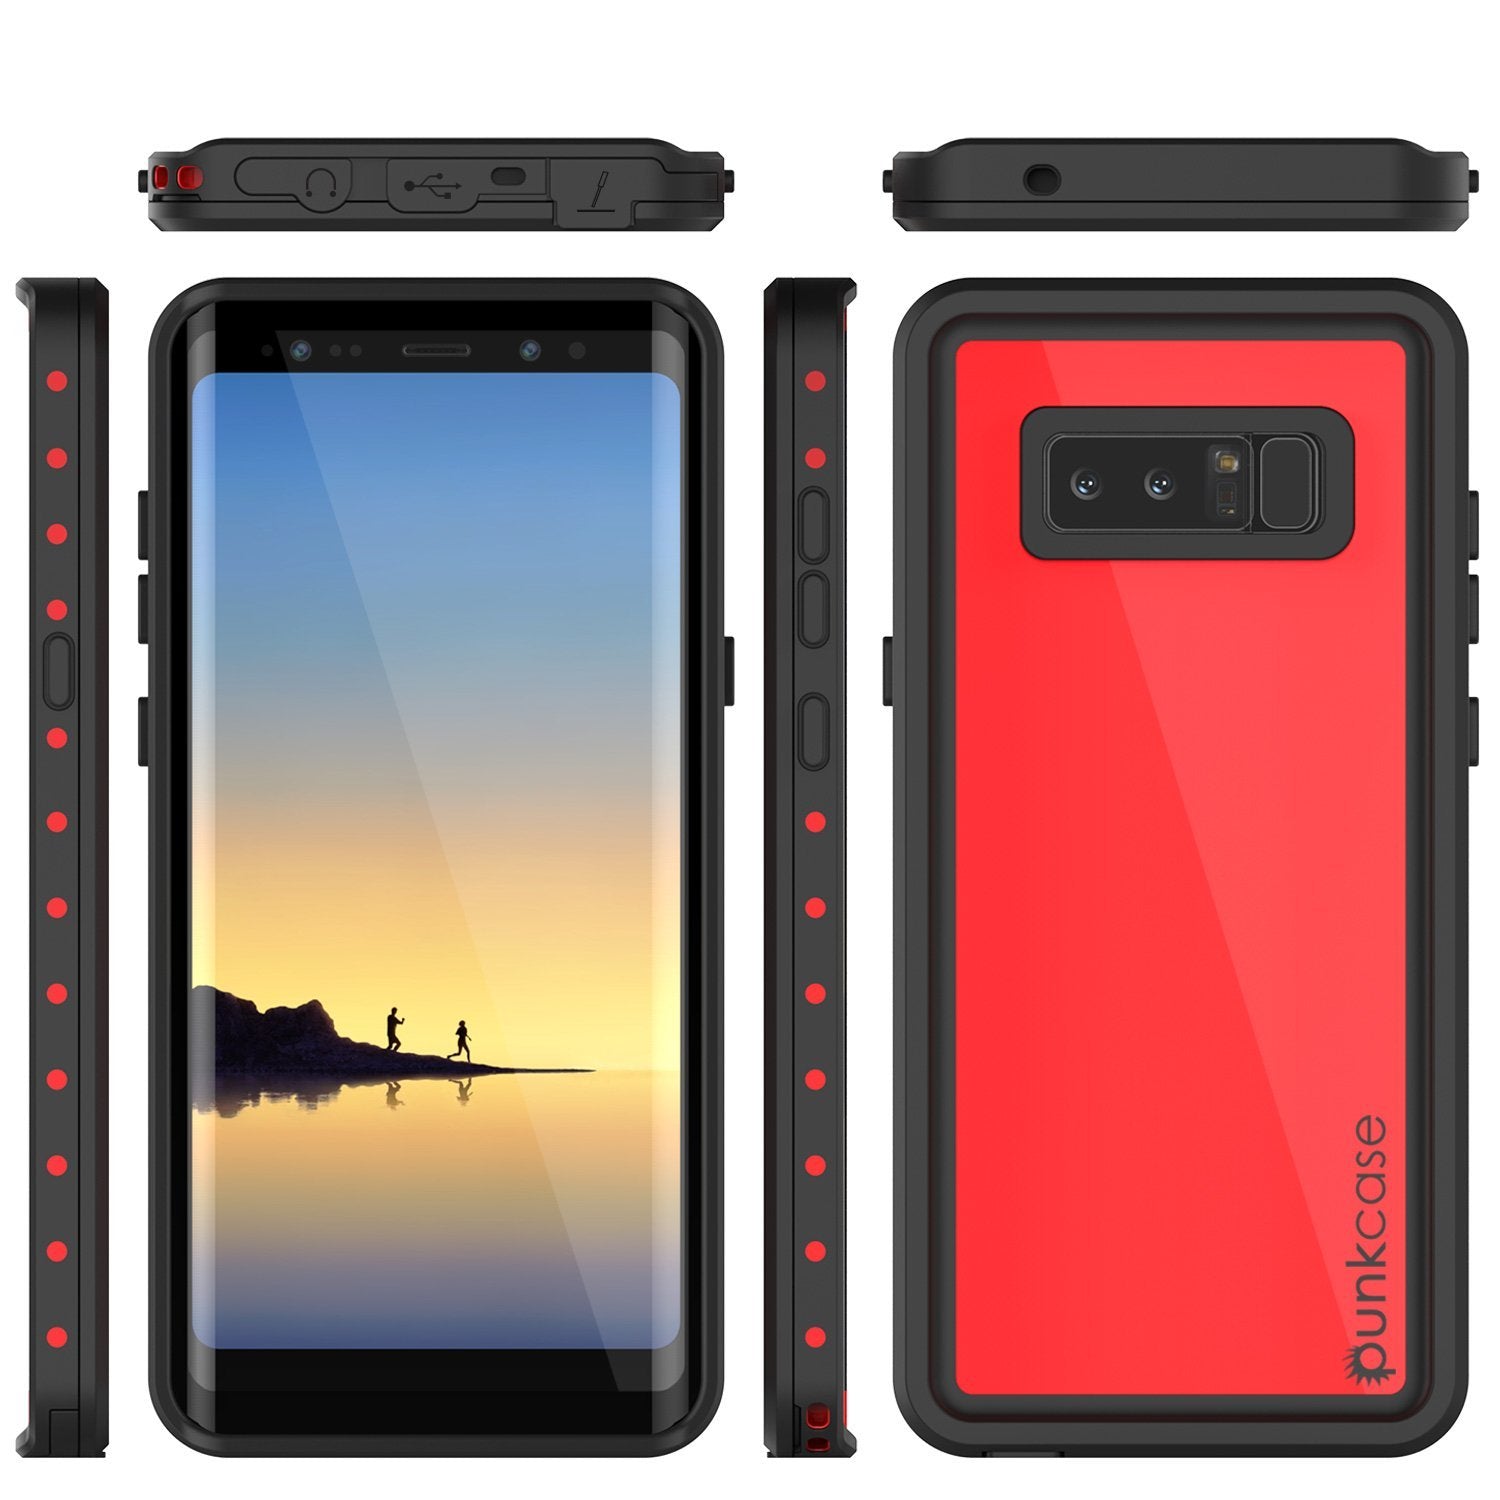 Galaxy Note 8 Waterproof case, StudStar Series Armor Cover, [RED]